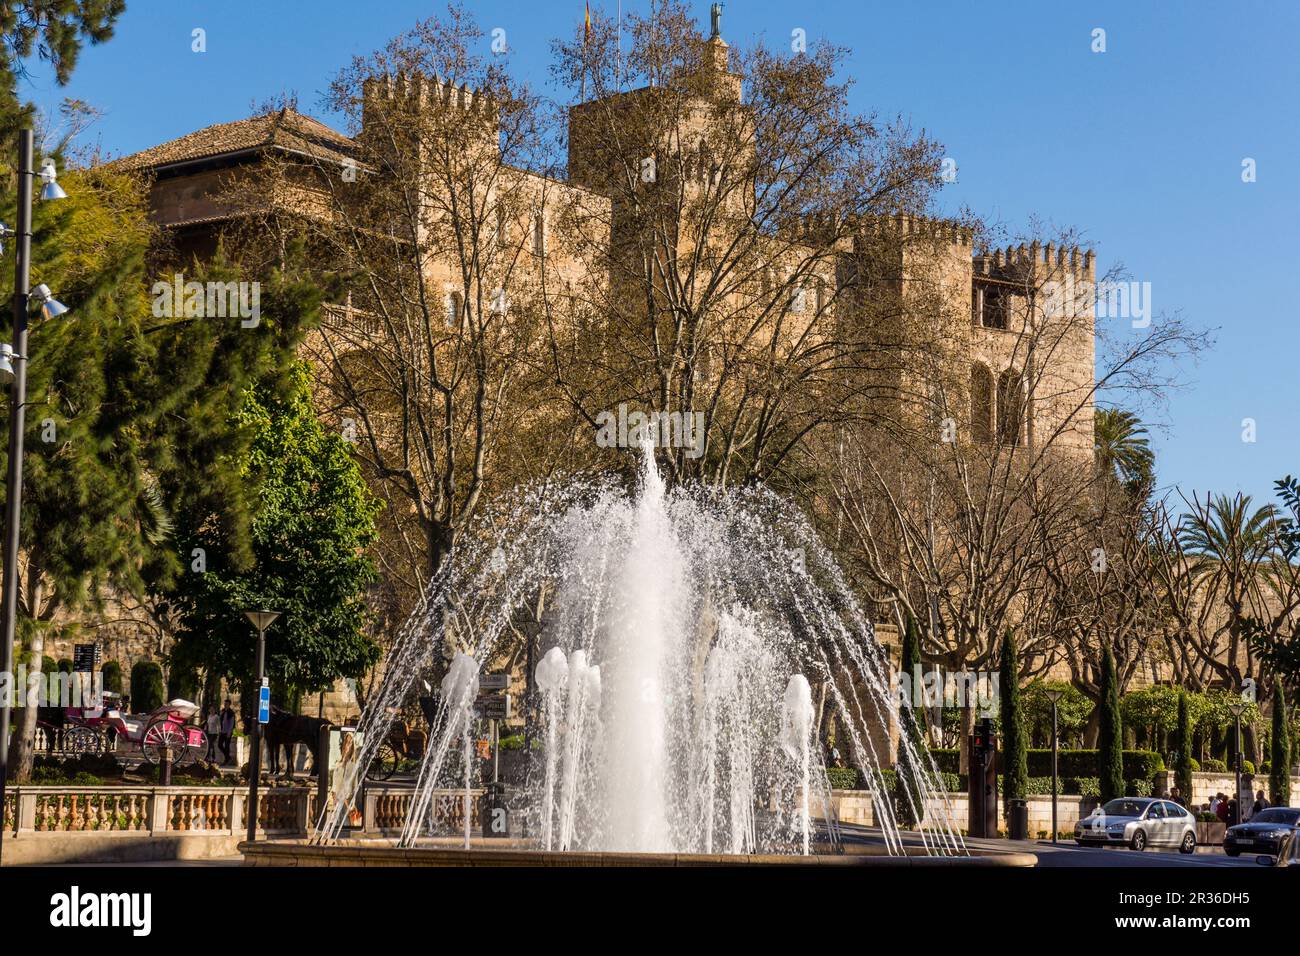 Plaza de la Reina y Palacio Real de La Almudaina, Palma, Mallorca, balearic islands, spain, europe. Stock Photo